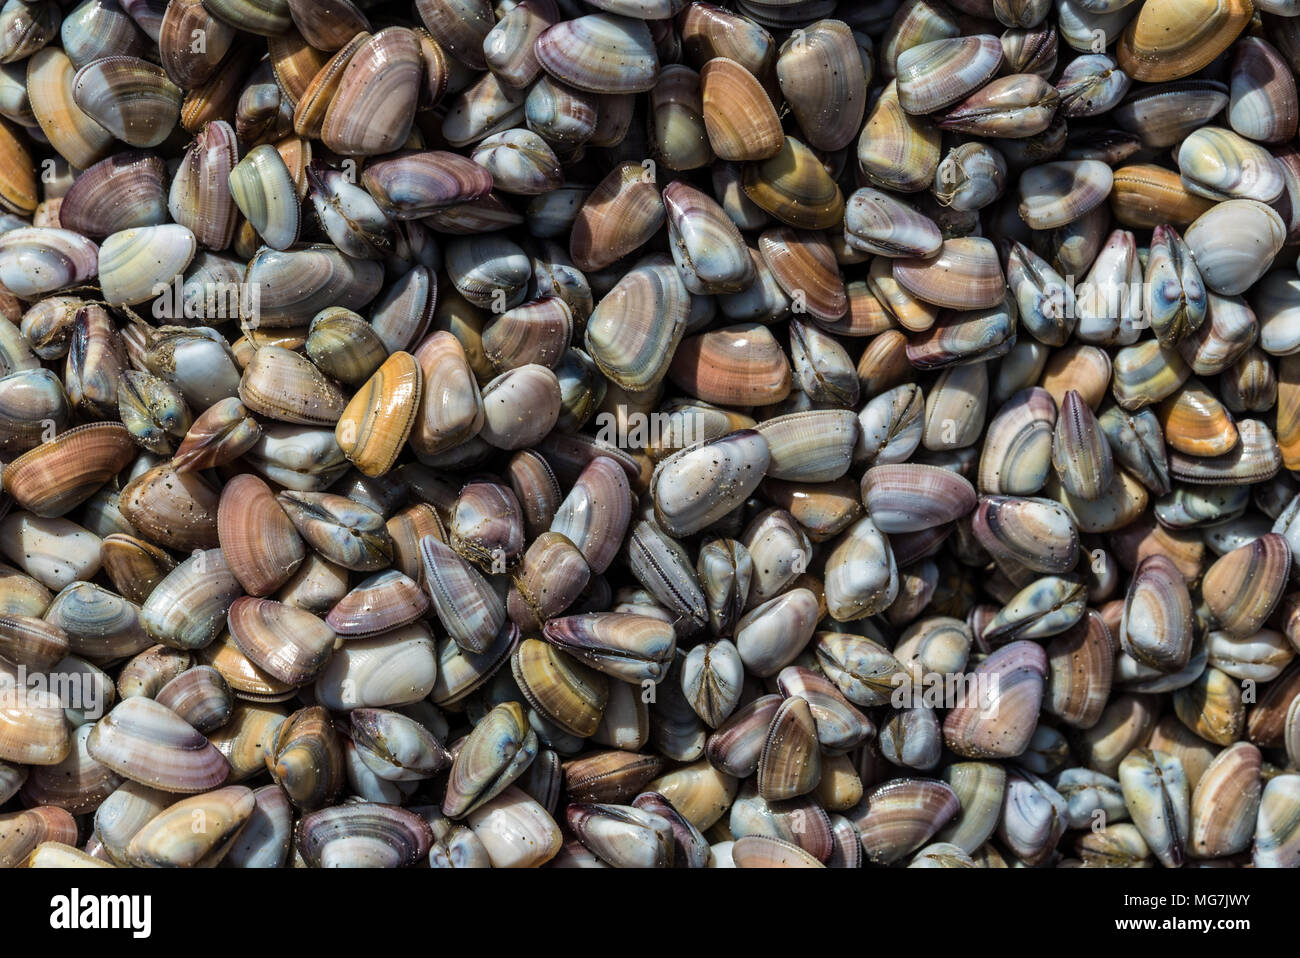 A pile of small coquina sea shells on the beach Stock Photo